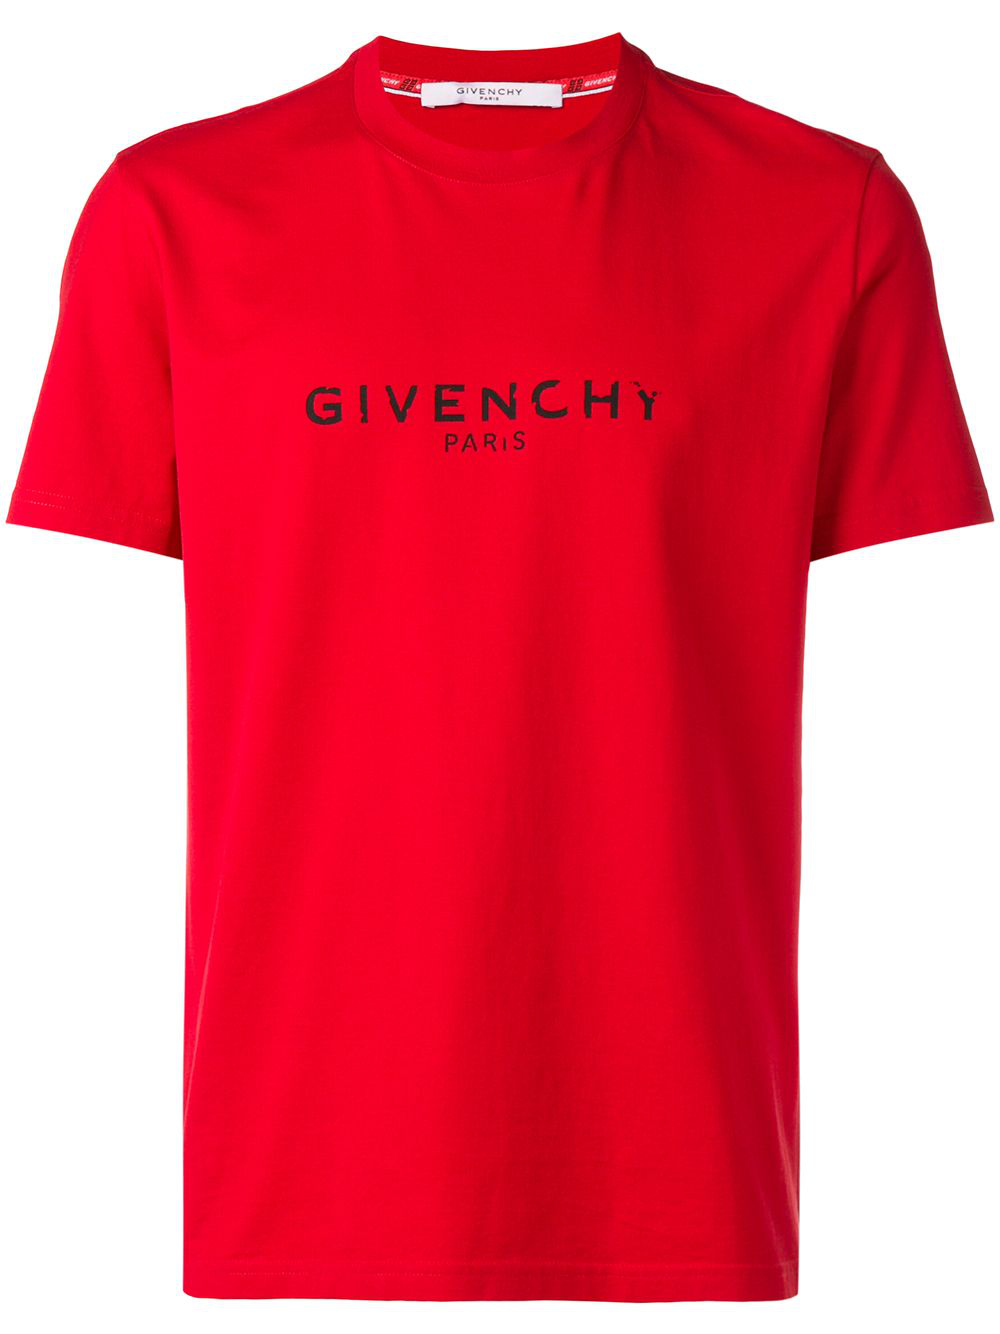 Givenchy Paris Vintage T-shirt - Red | ModeSens